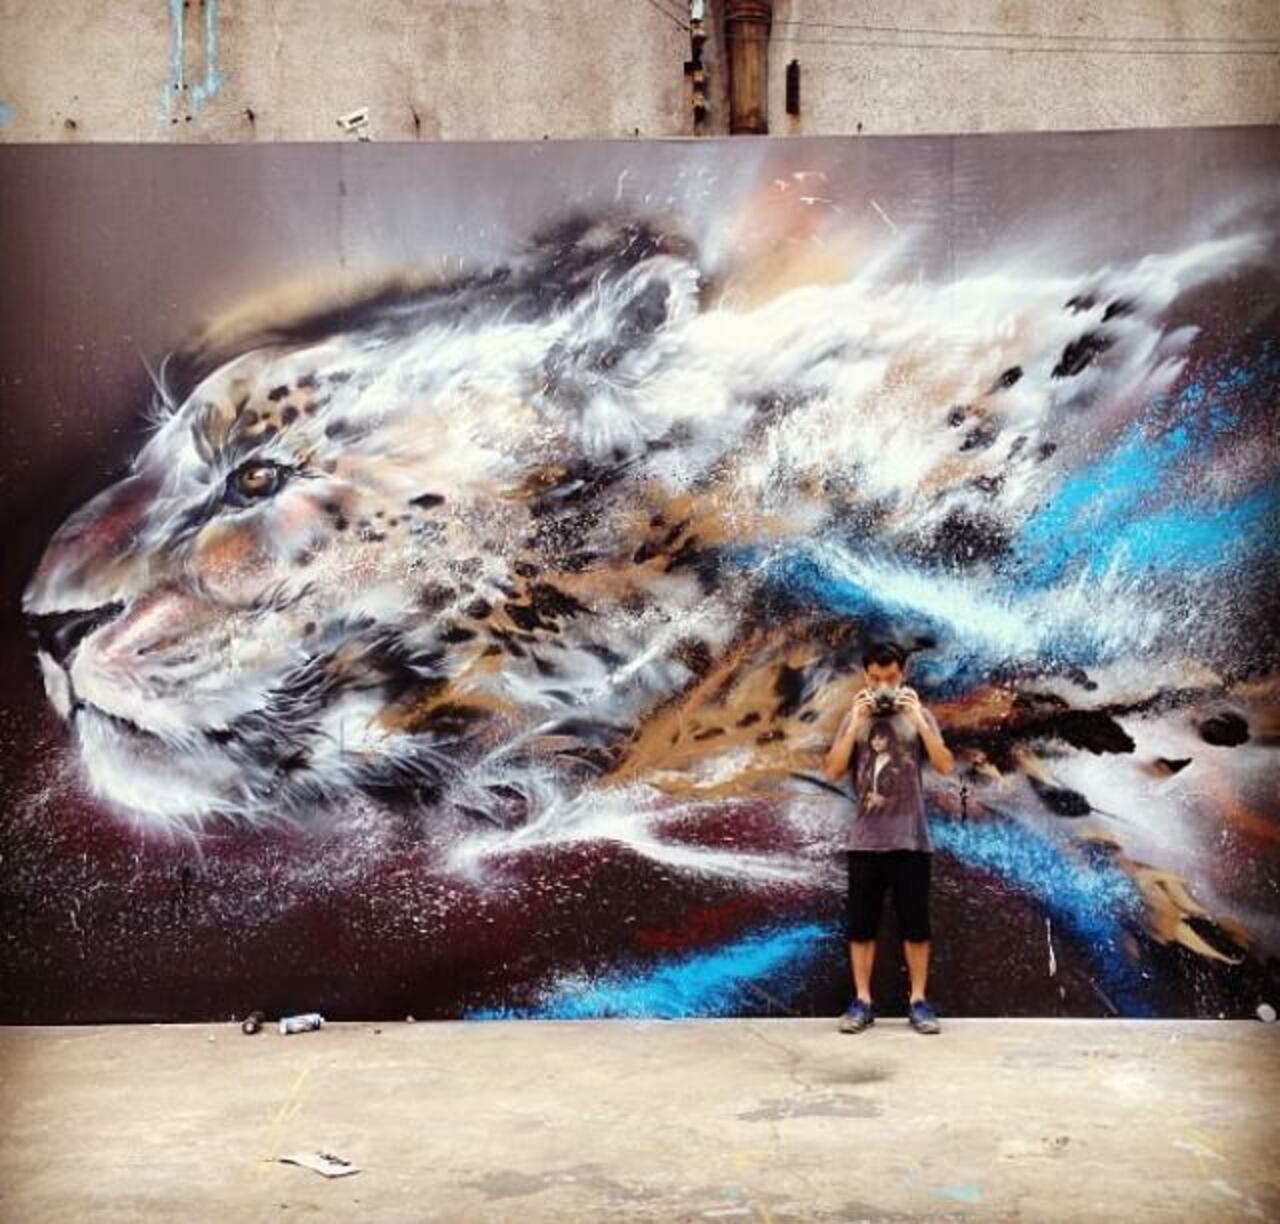 RT @designopinion: Artist Huatunan from China, recent mind blowing nature in Street Art wall. #are #graffiti #mural #streetart http://t.co/uEacBE3RsV